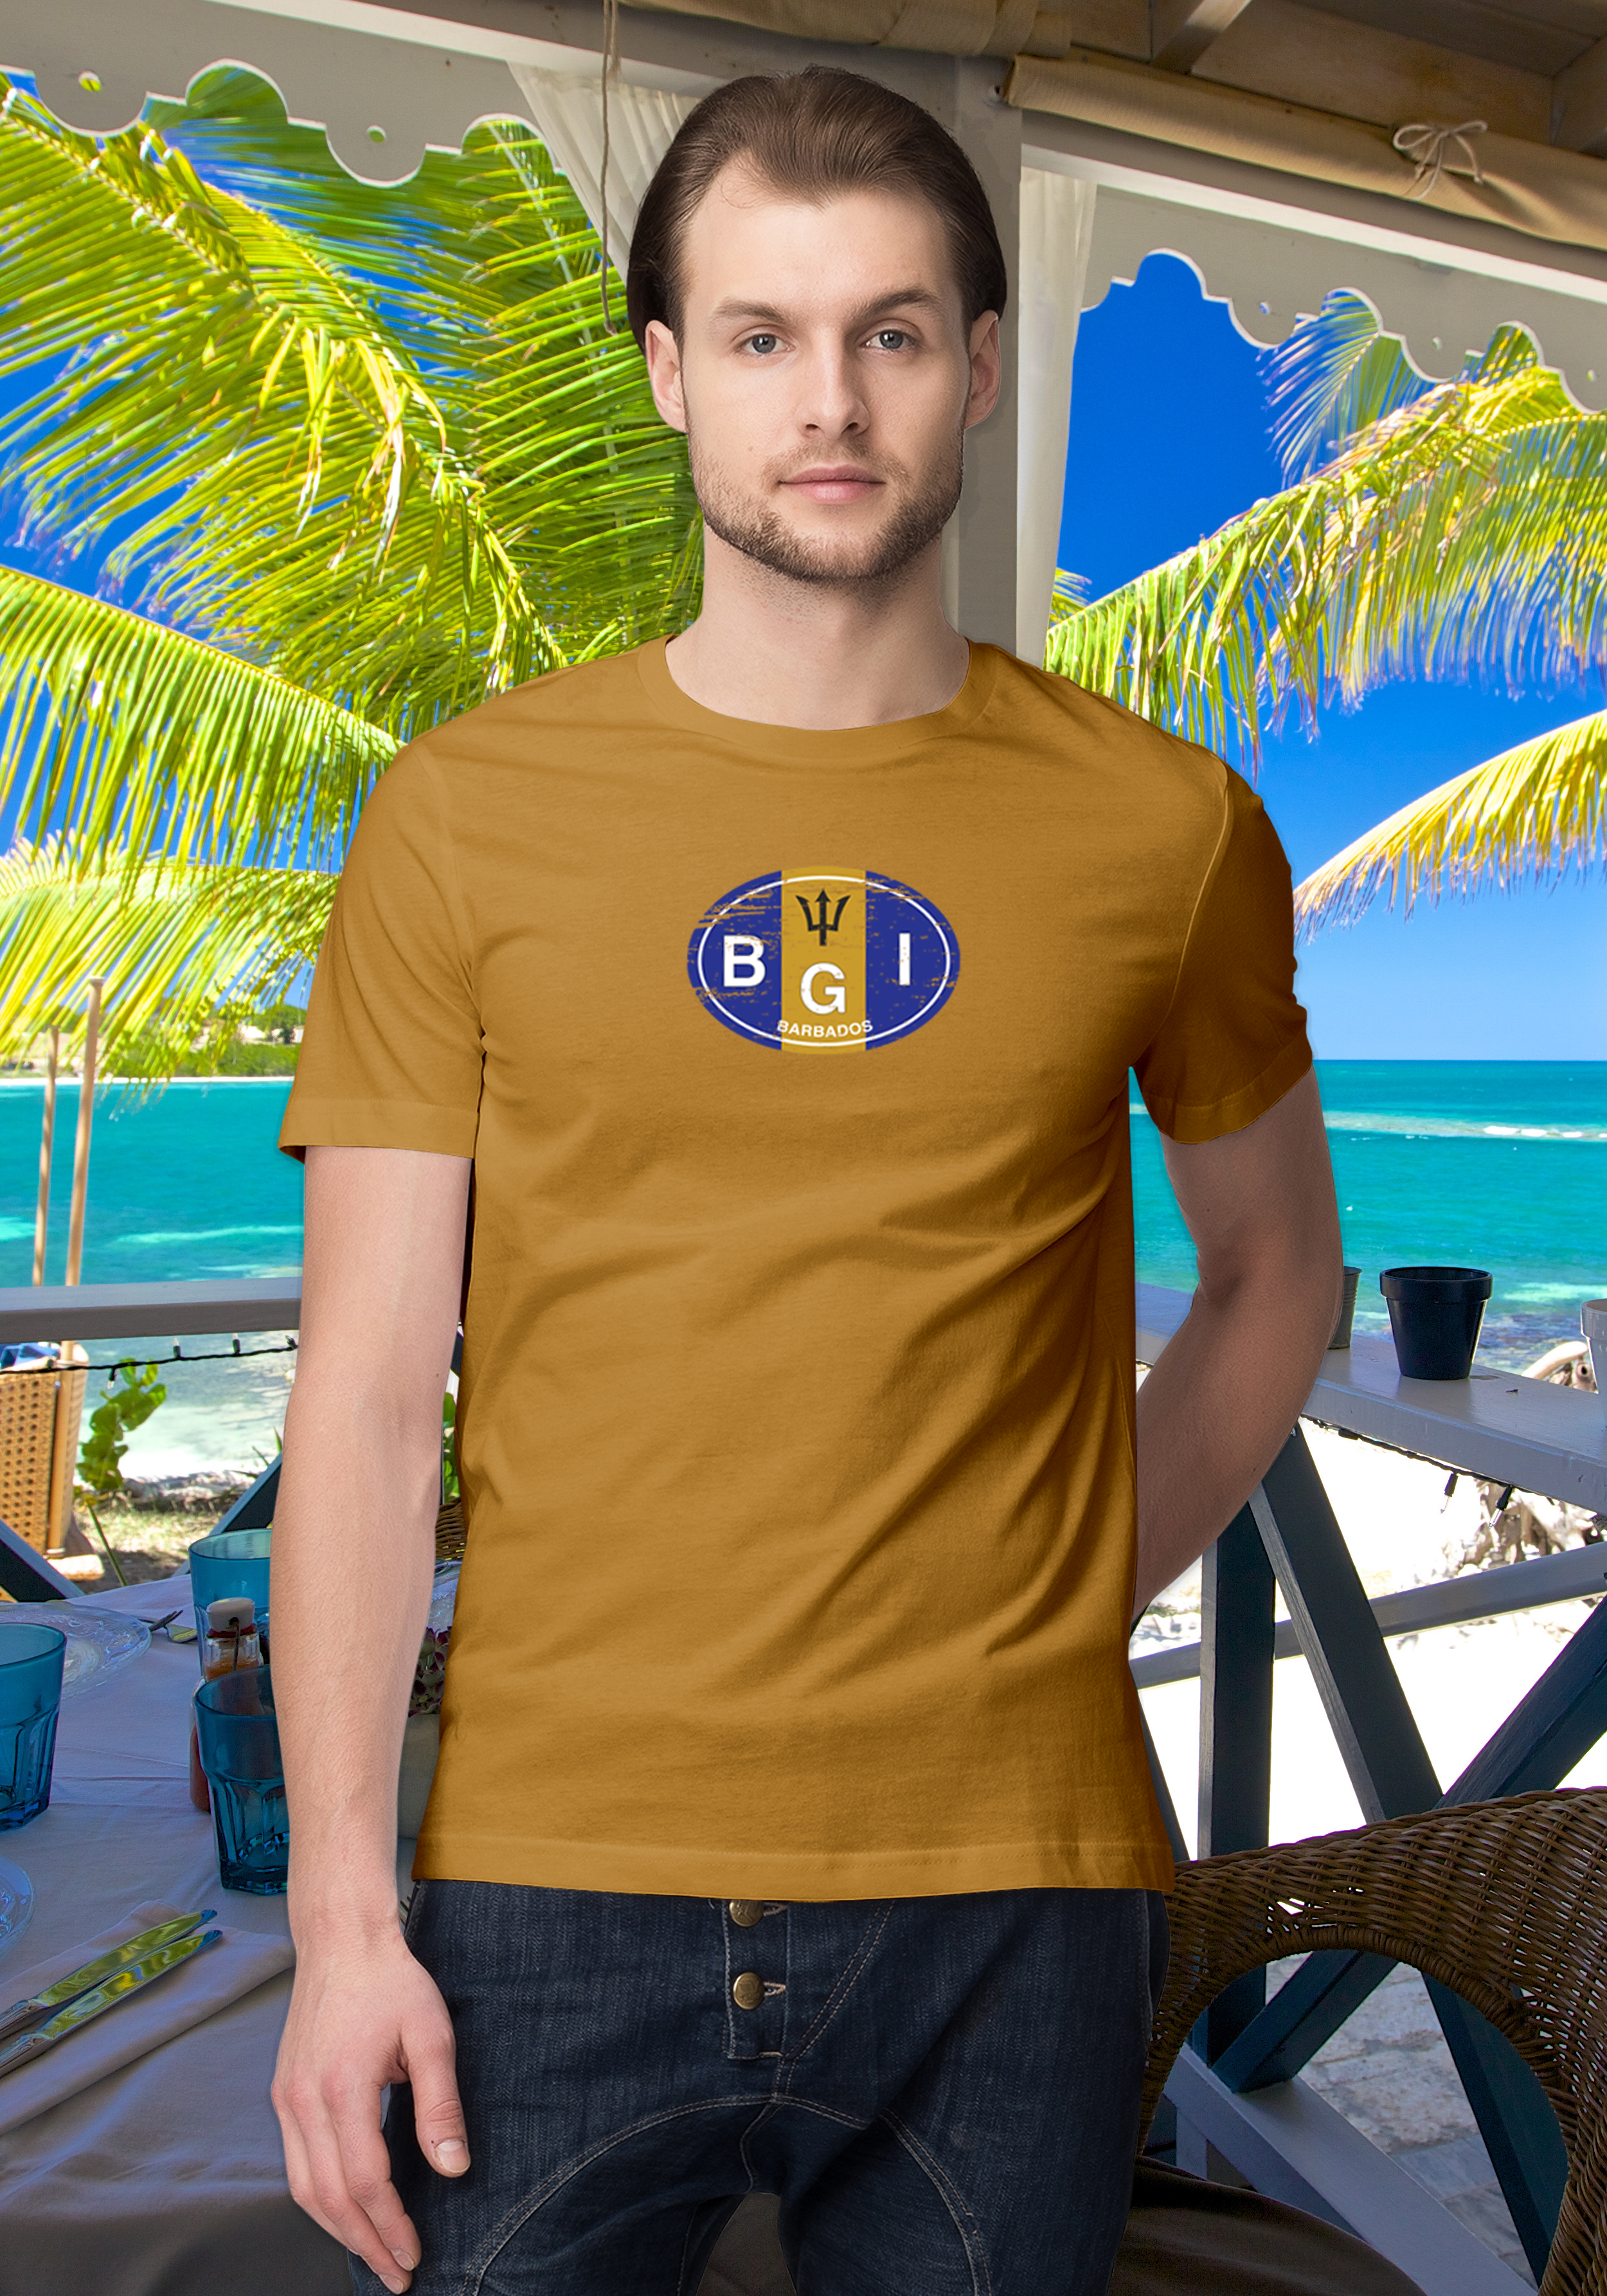 Barbados Men's Flag T-Shirt Souvenirs - My Destination Location